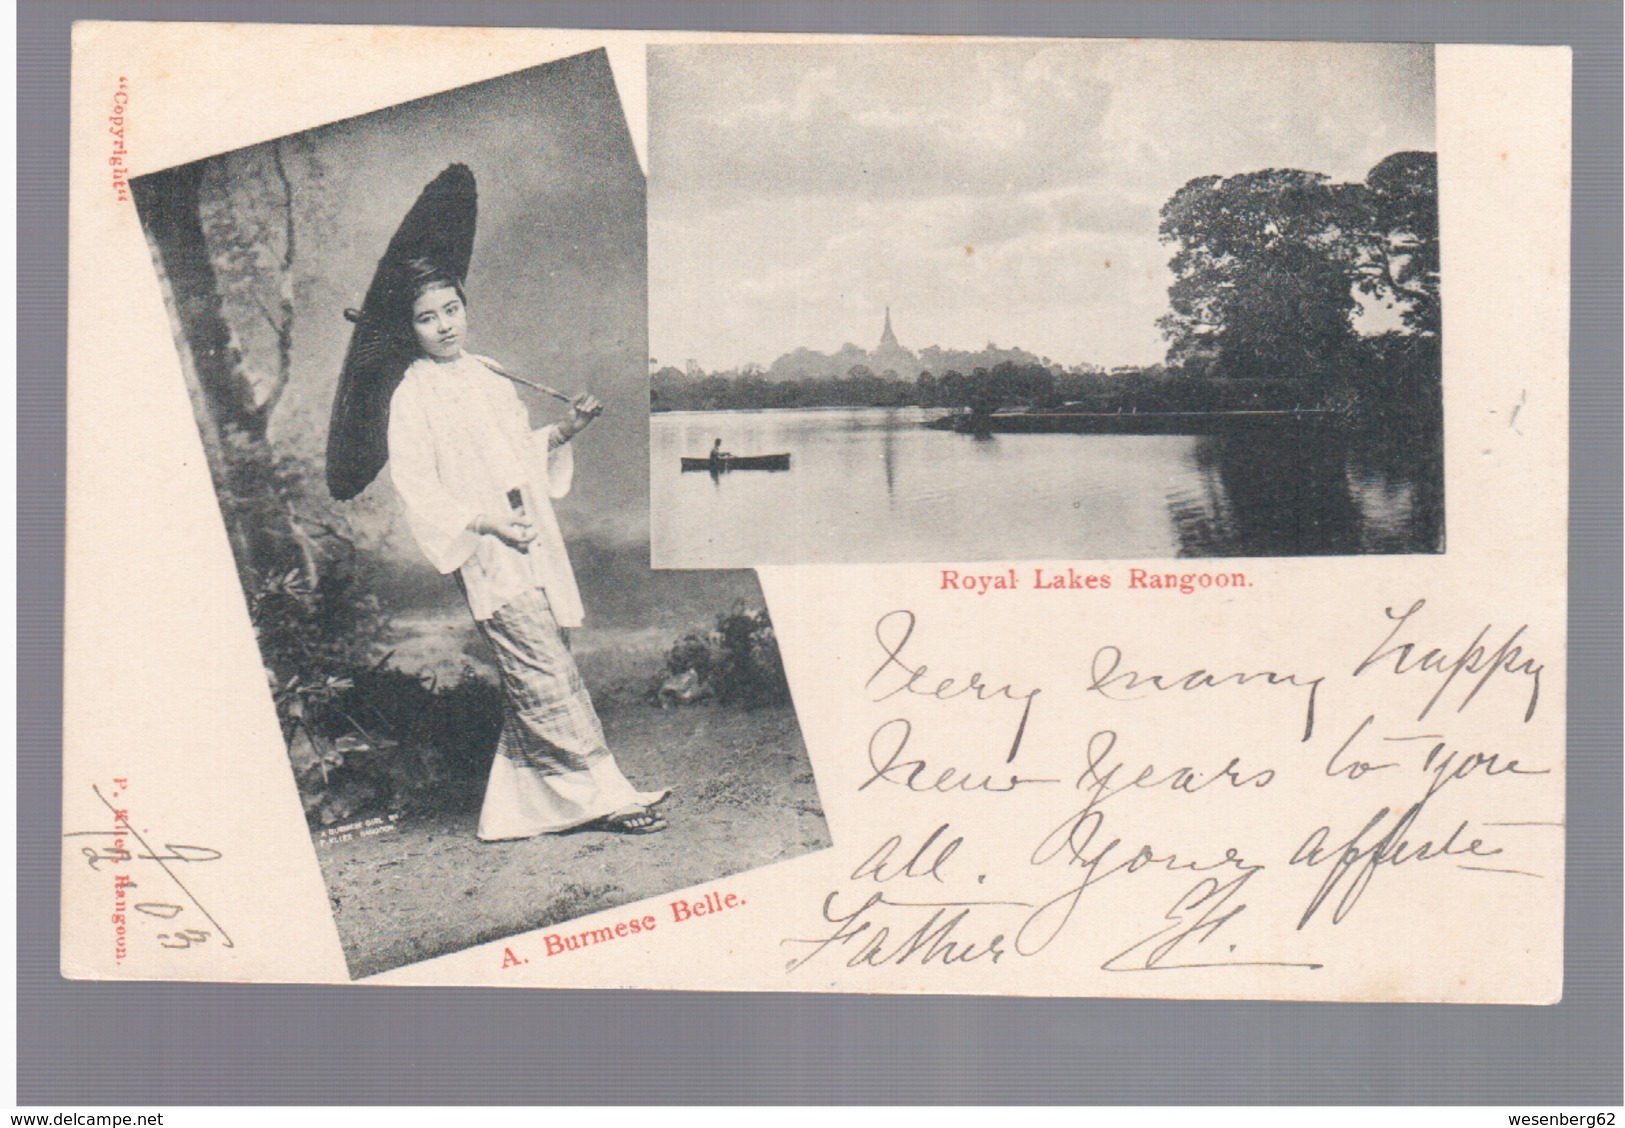 BURMA/ MYANMAR A Burmese Belle, Royal Lakes Rangoon Ca 1910 OLD POSTCARD 2 Scans - Myanmar (Burma)